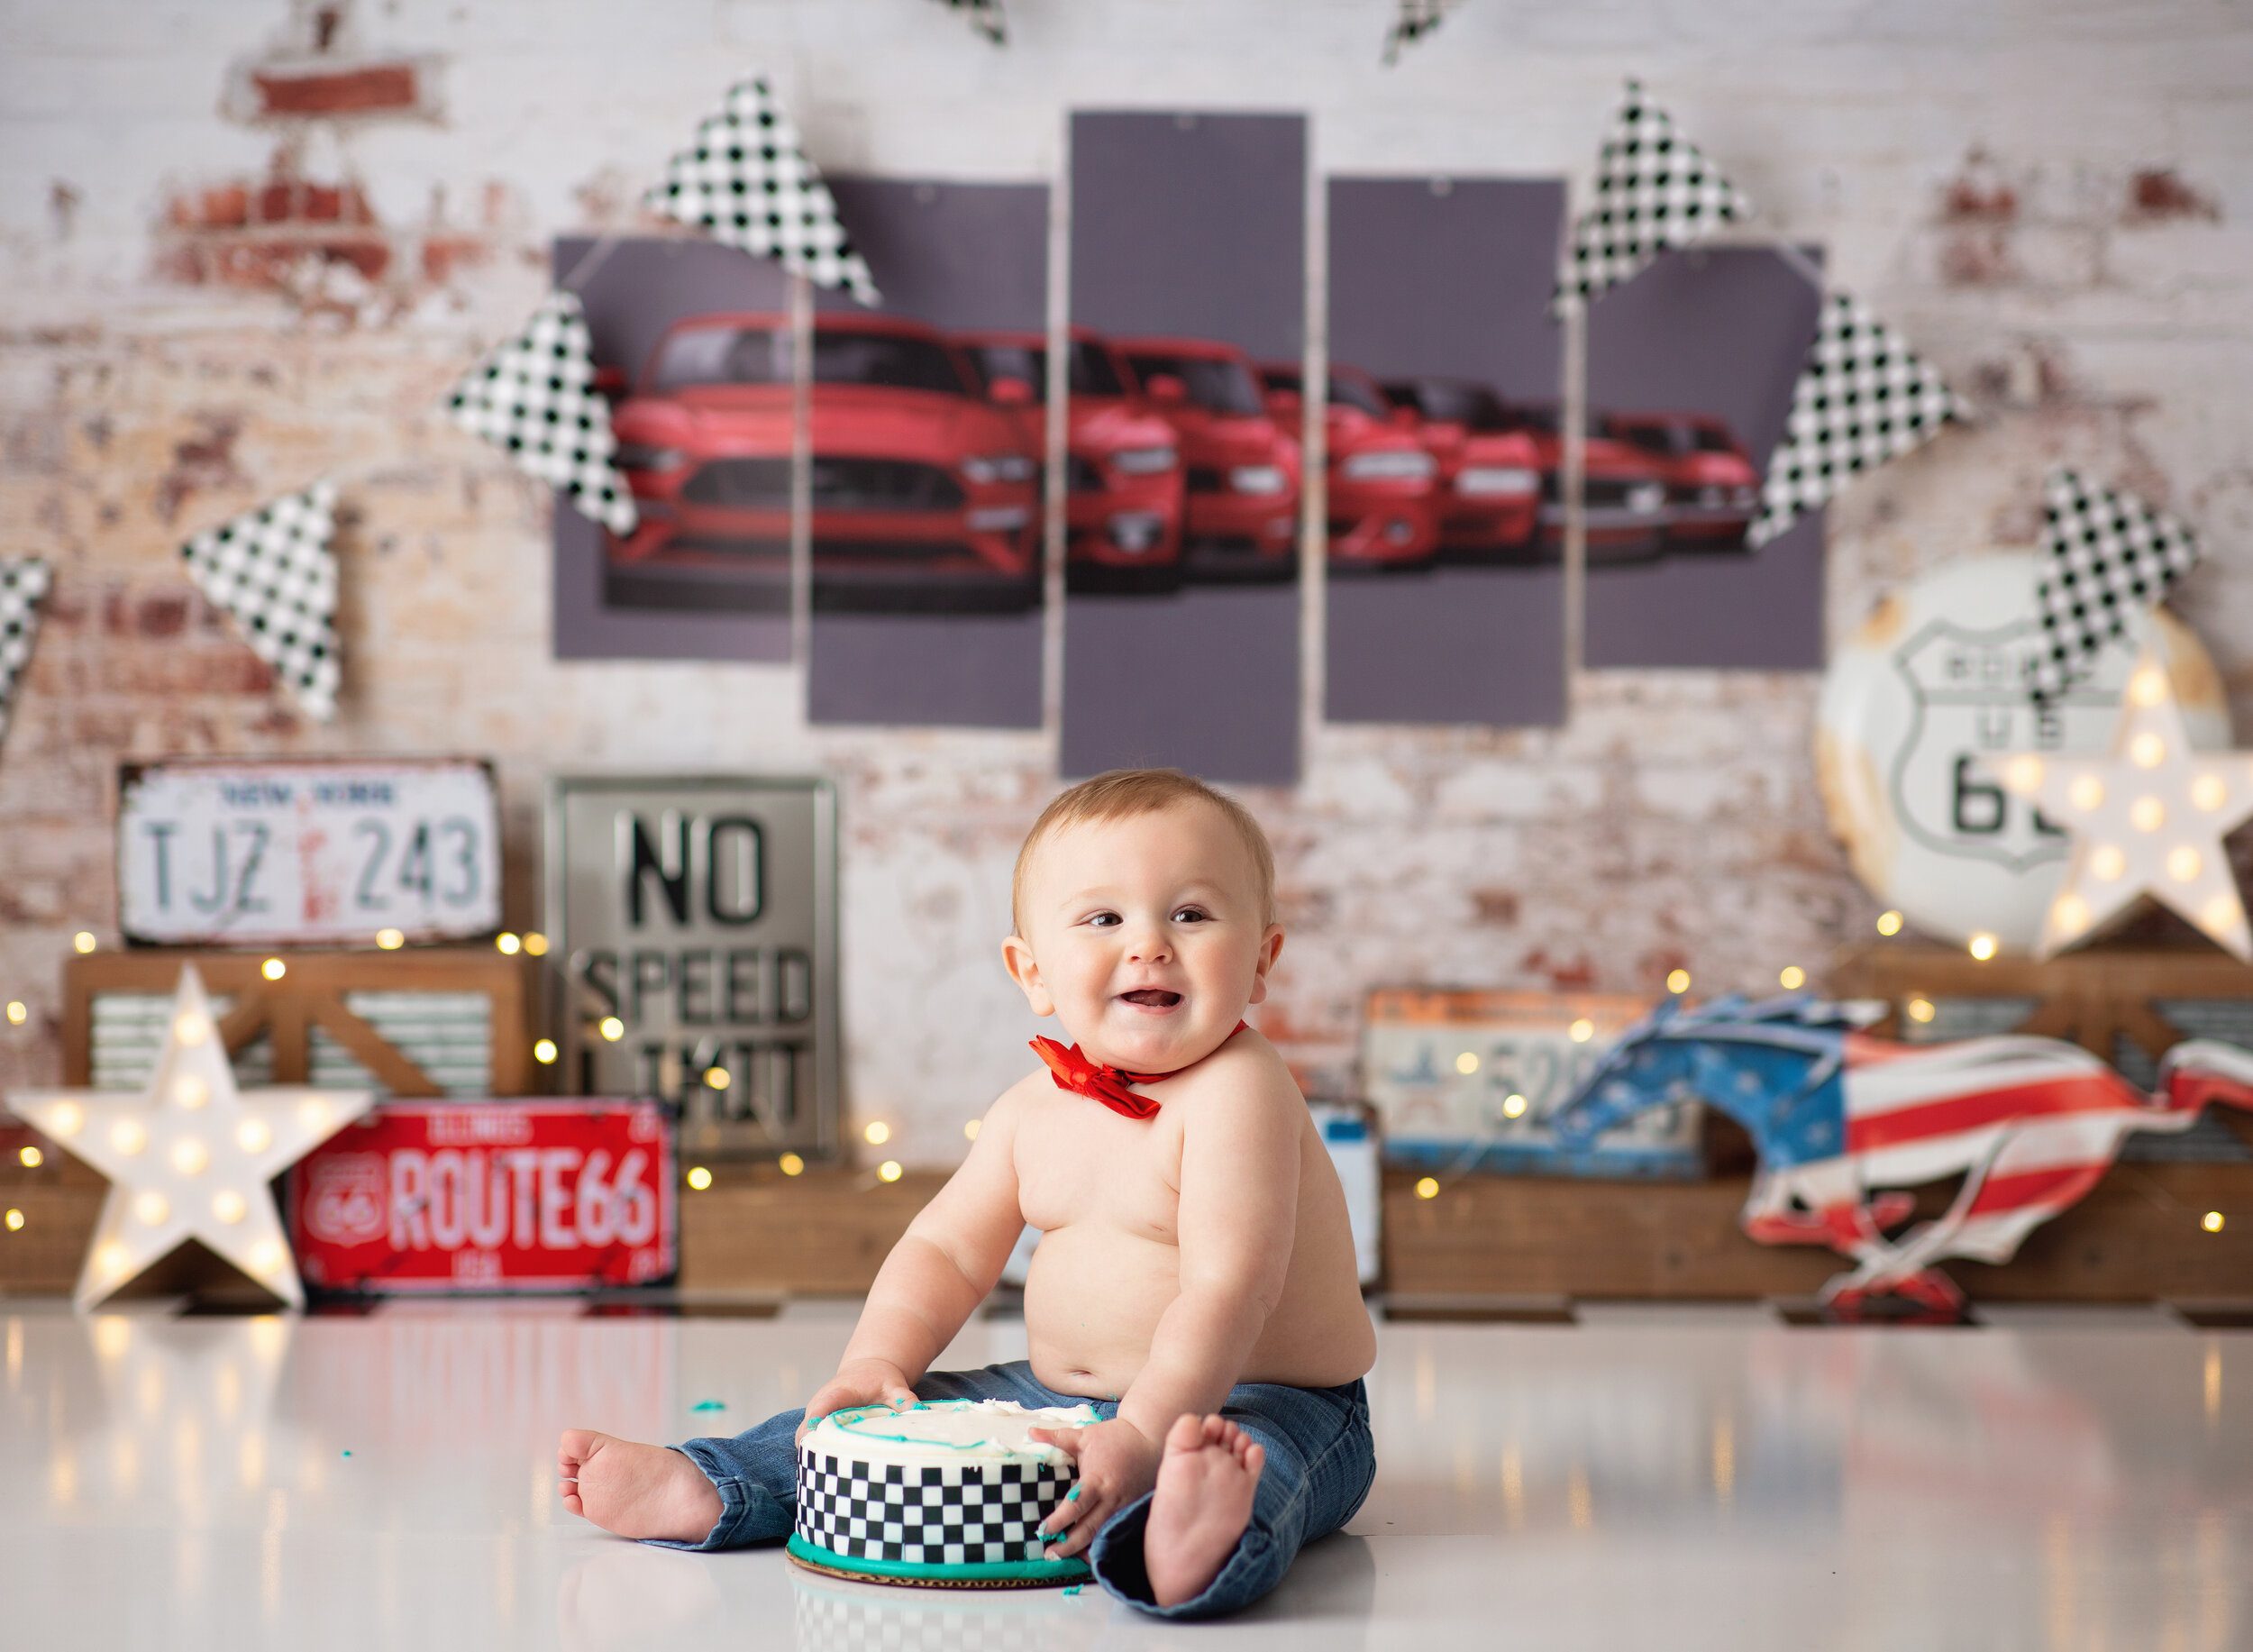  Chunky baby sitting on floor with a birthday cake against a customized race car backdrop 